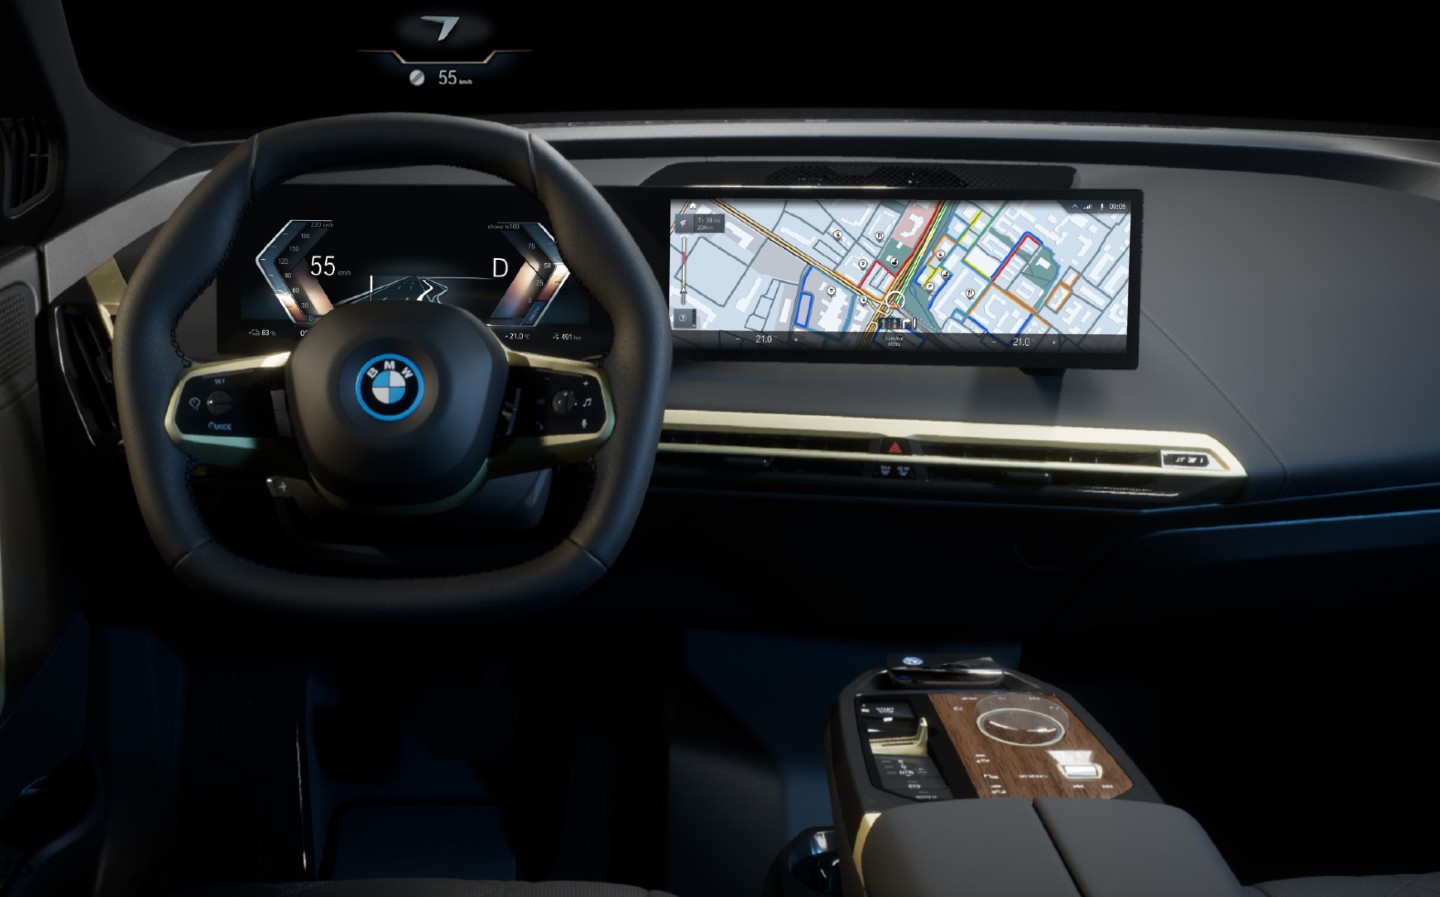 BMW reveals upgraded iDrive infotainment system